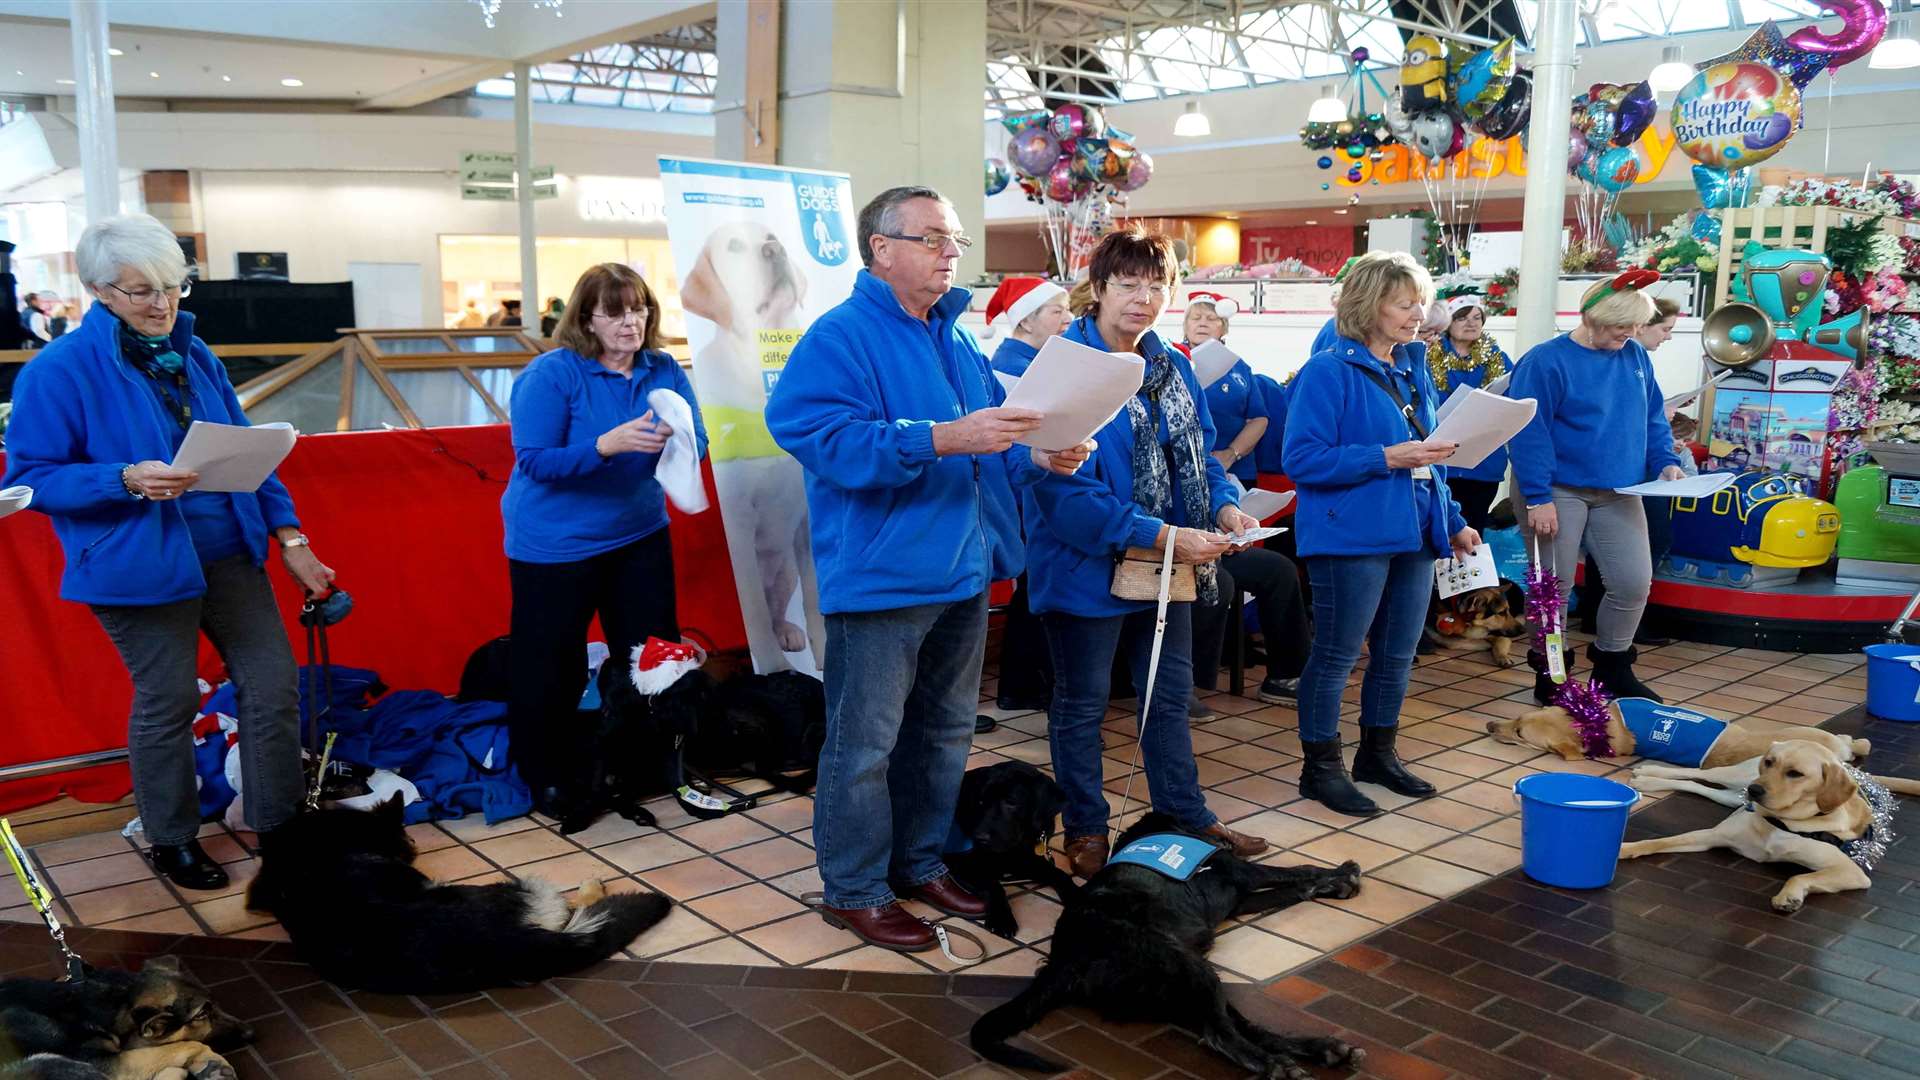 Volunteers singing carols at Hempstead Valley Shopping Centre